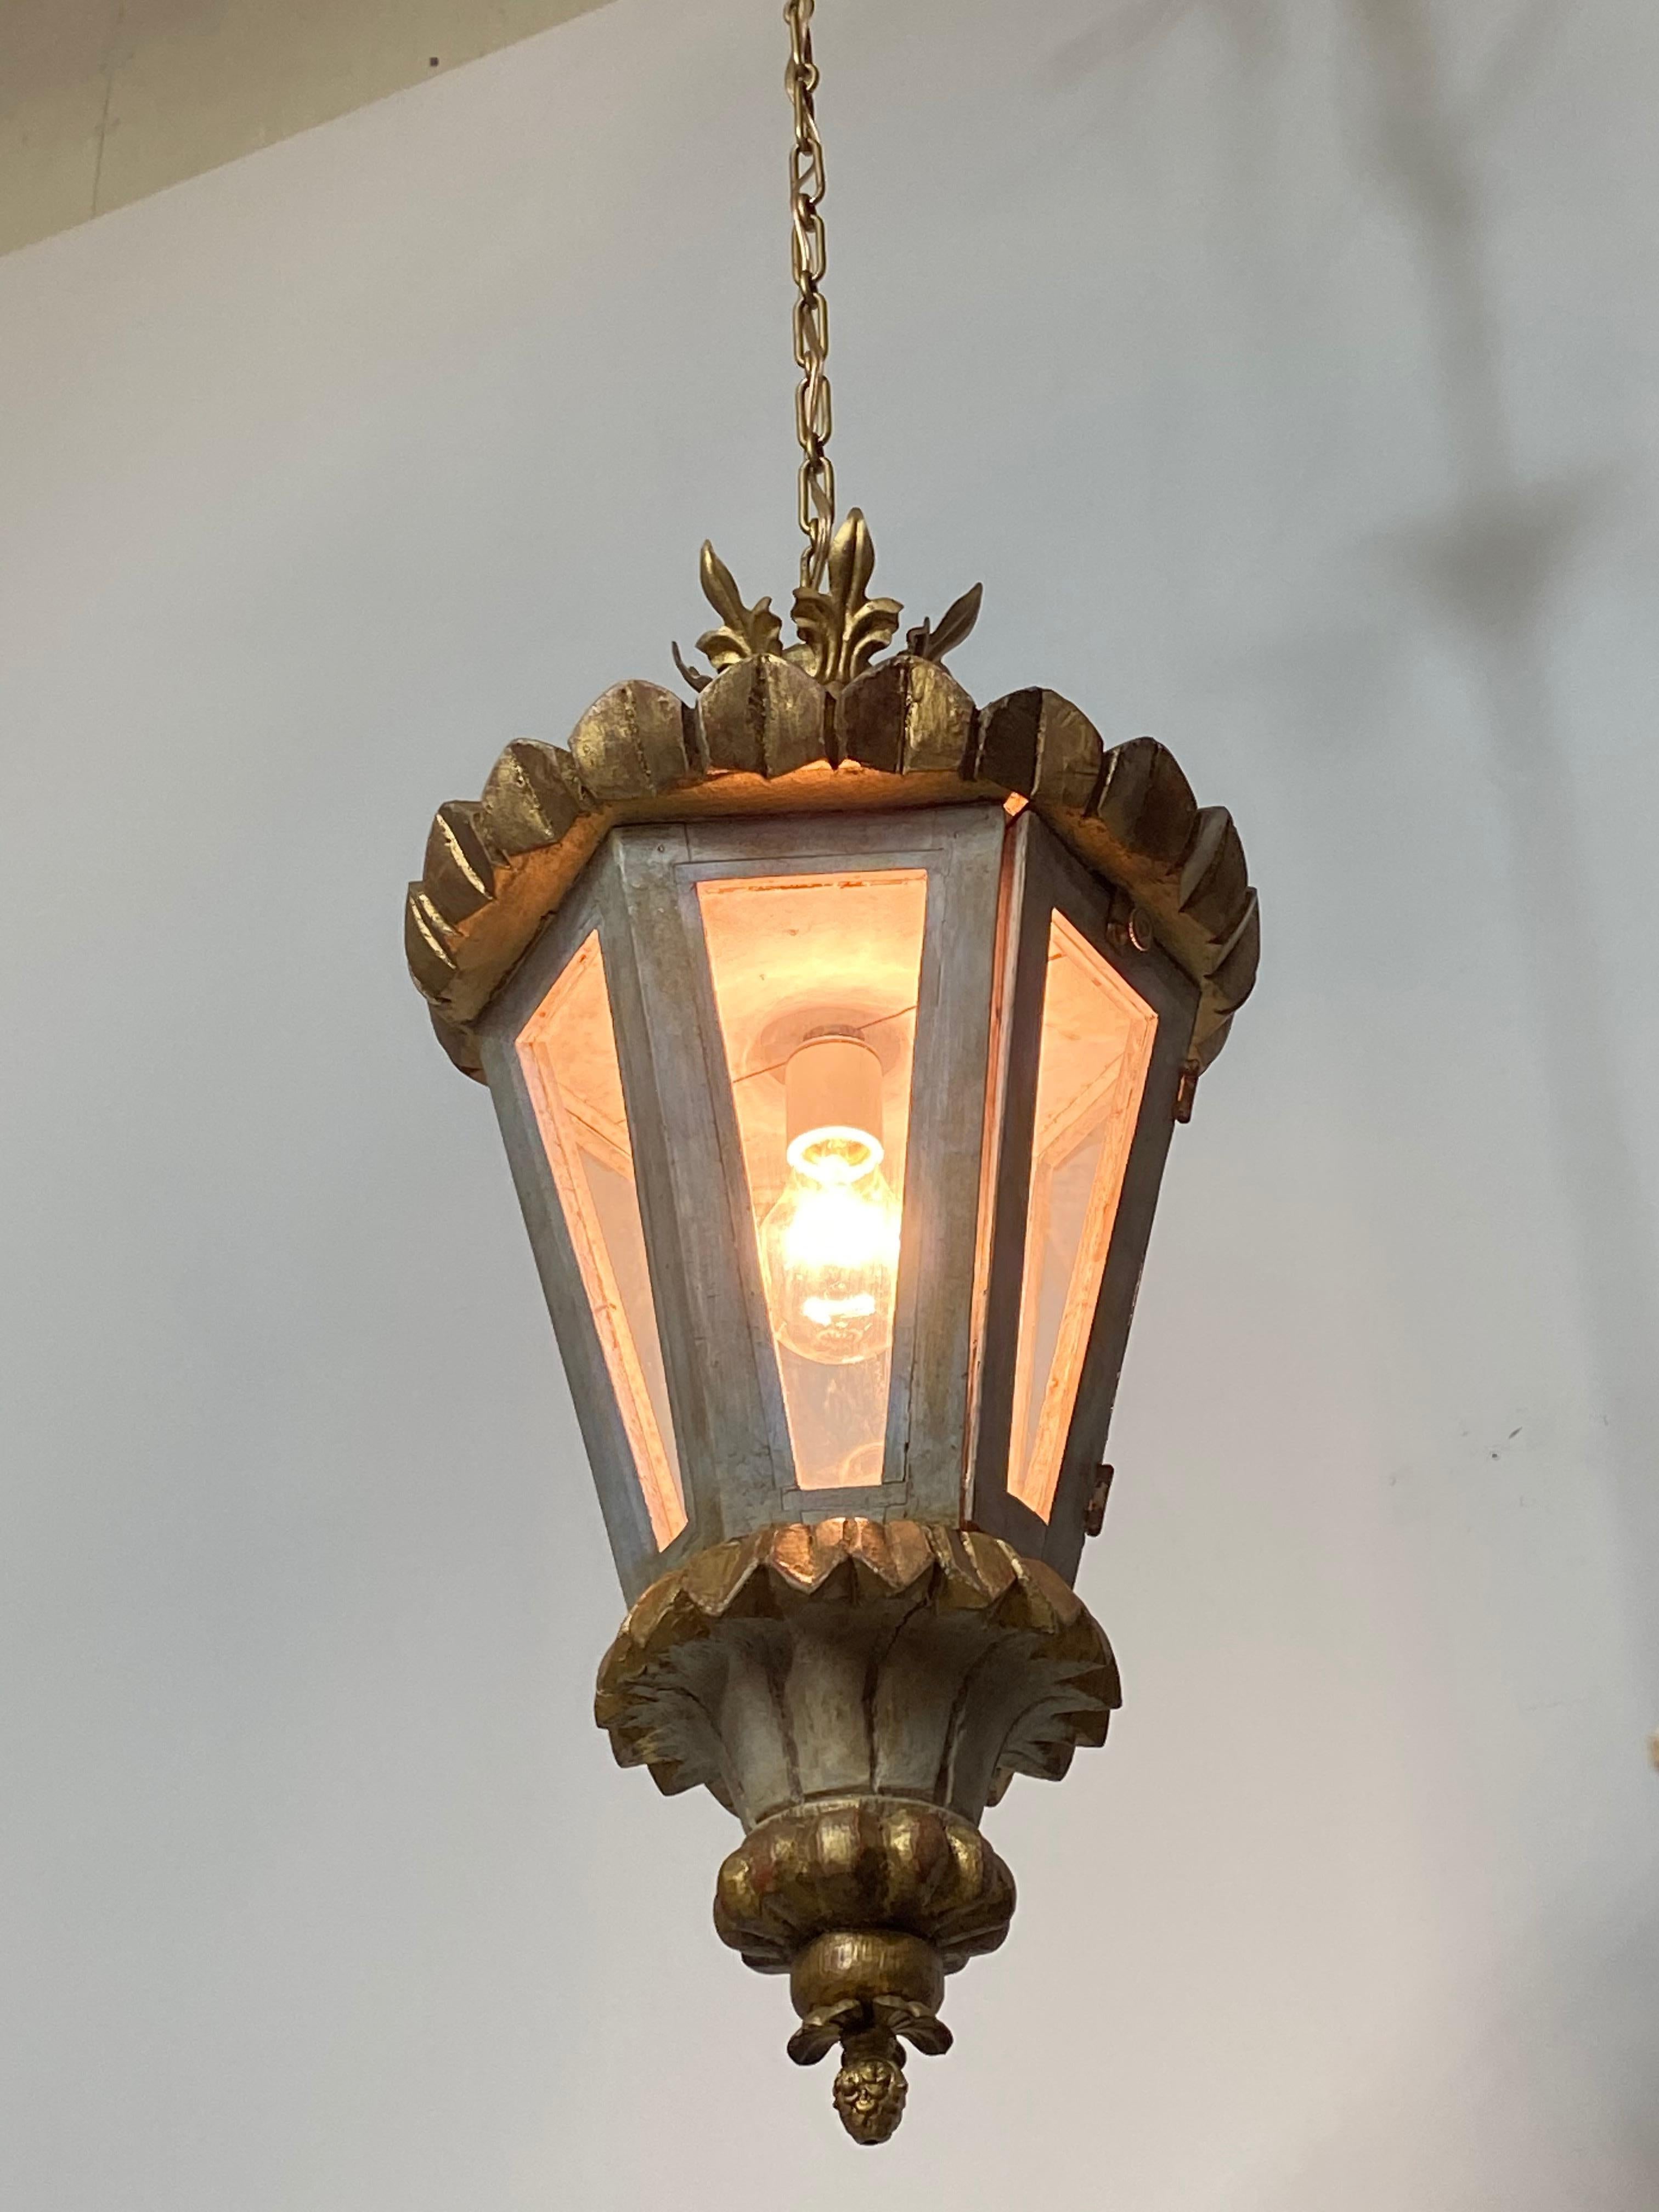 Italian Late 19th-Early 20th Century Venetian Style Wood and Metal Hanging Lantern